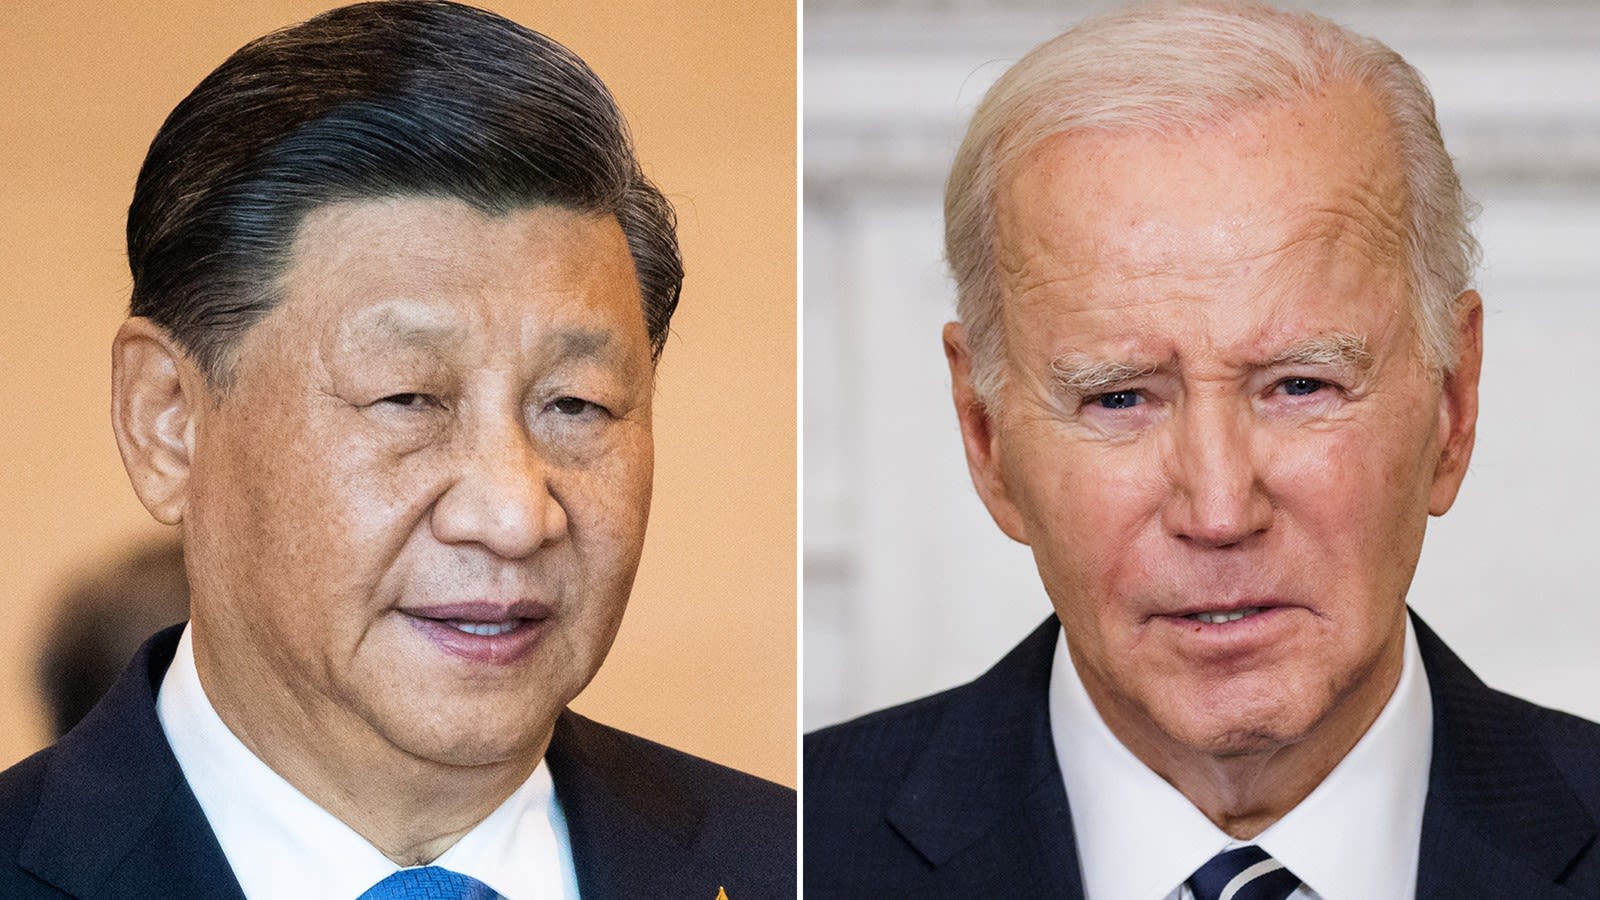 From left, President Xi Jinping and President Joe Biden.